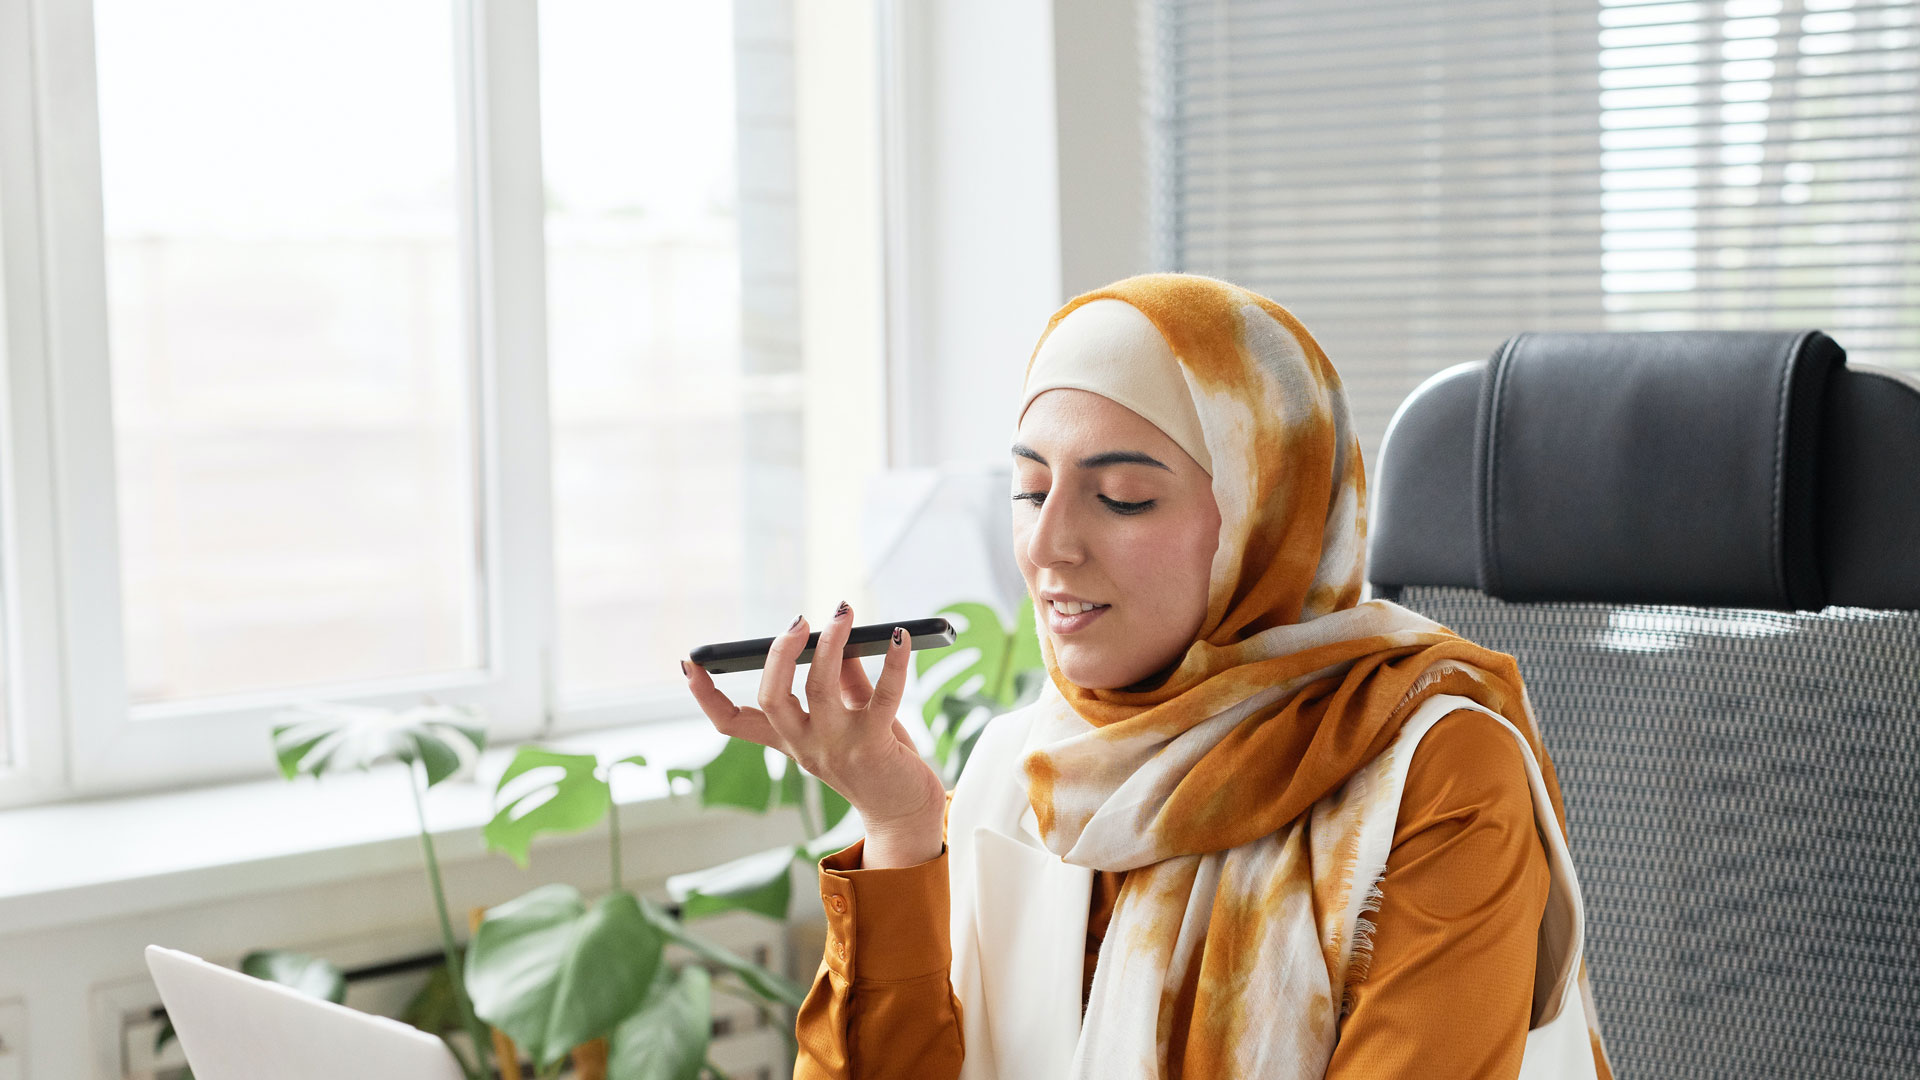 A woman wearing an orange hijab is on speakerphone